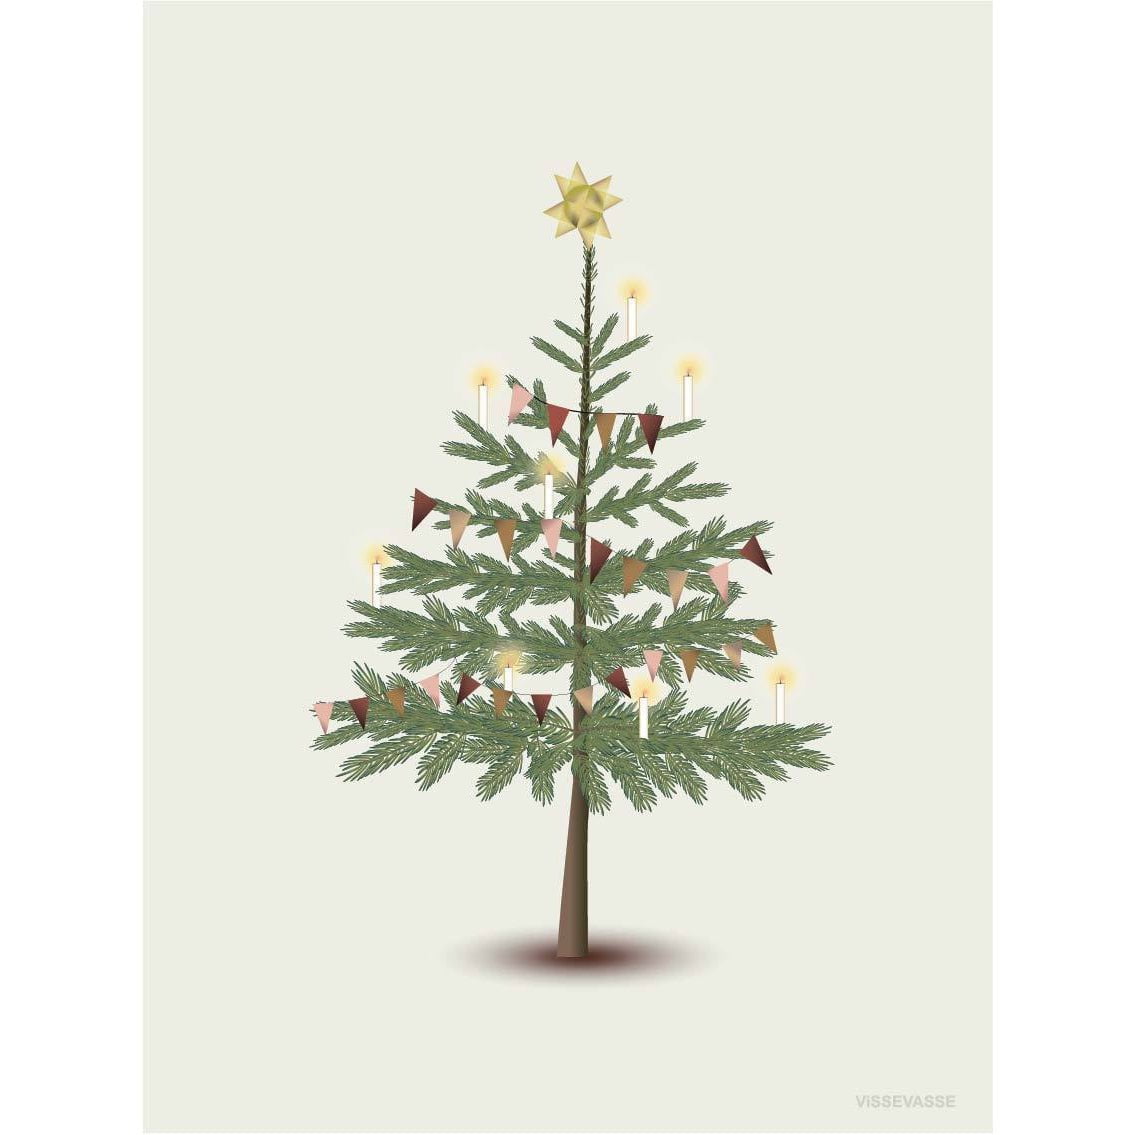 Vissevasse The Christmas Tree Blonging Card, 10,5x15cm